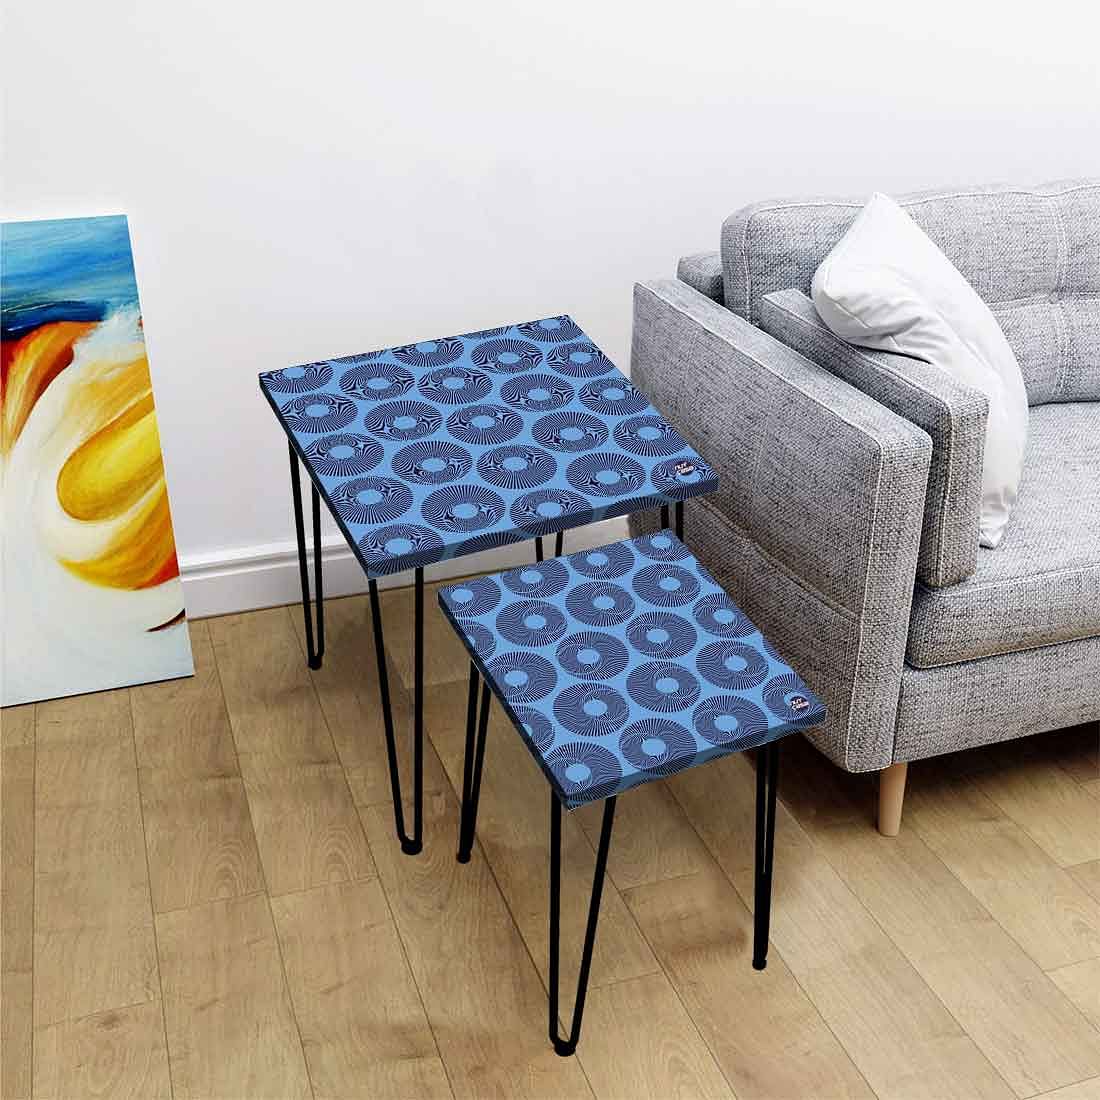 Nest of Side Tables for Living Room Decor Set of 2 - Retro Pattern Nutcase